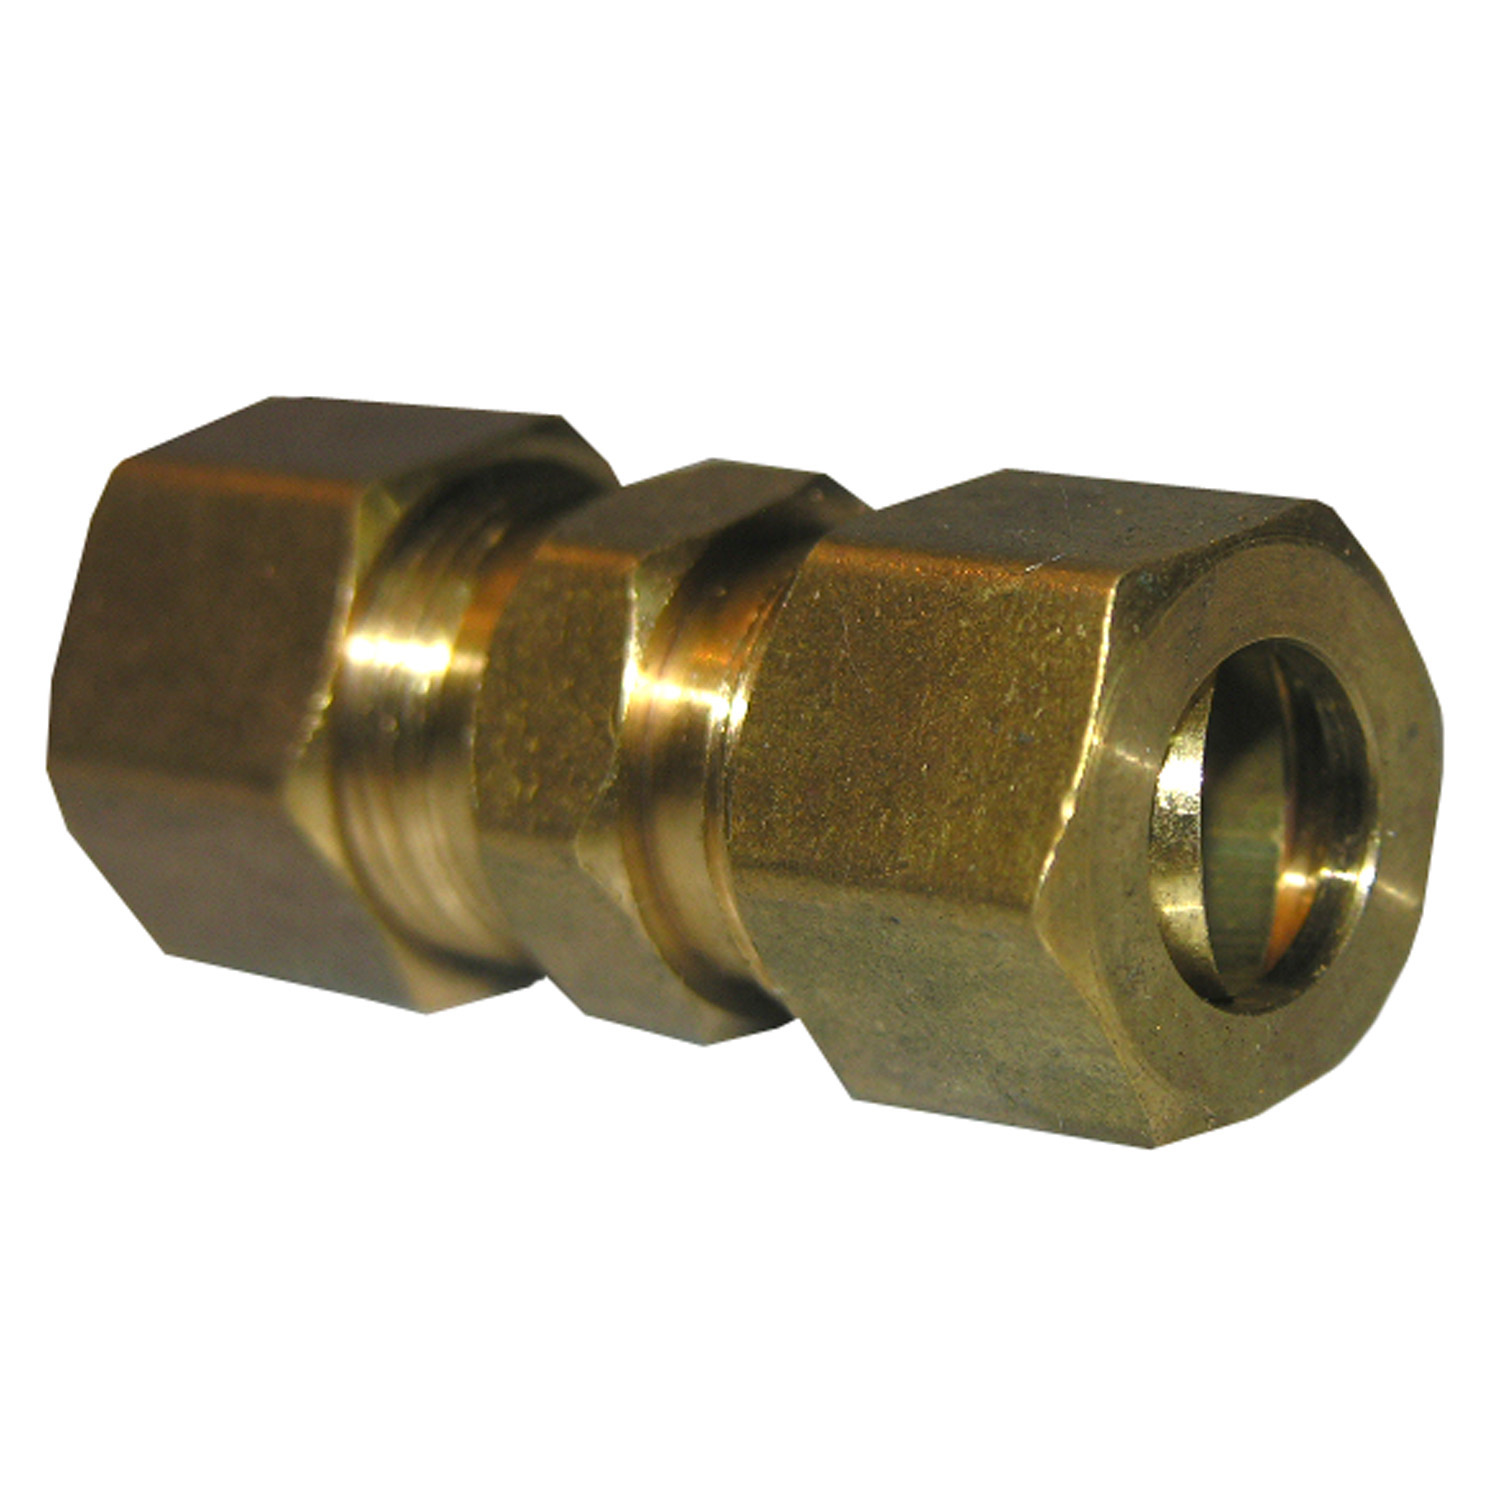 17-6229 Reducing Pipe Union, 3/8 x 1/4 in, Compression, Brass, 150 psi Pressure